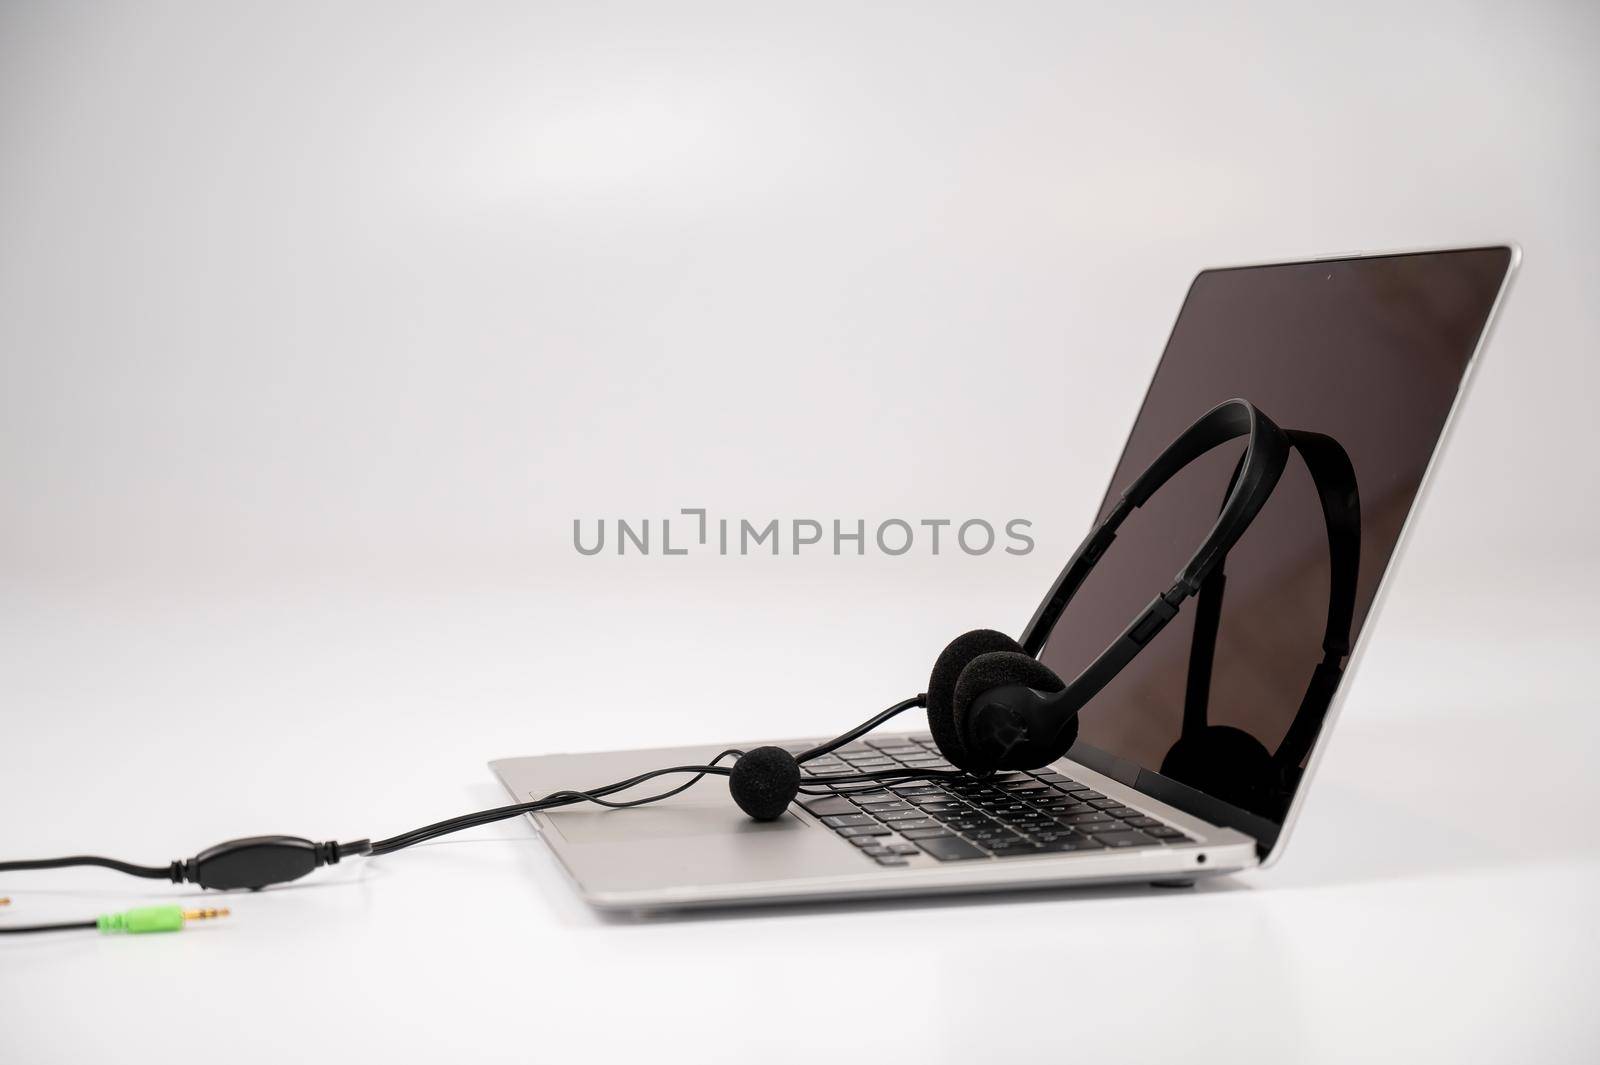 Headset on laptop keyboard on white background